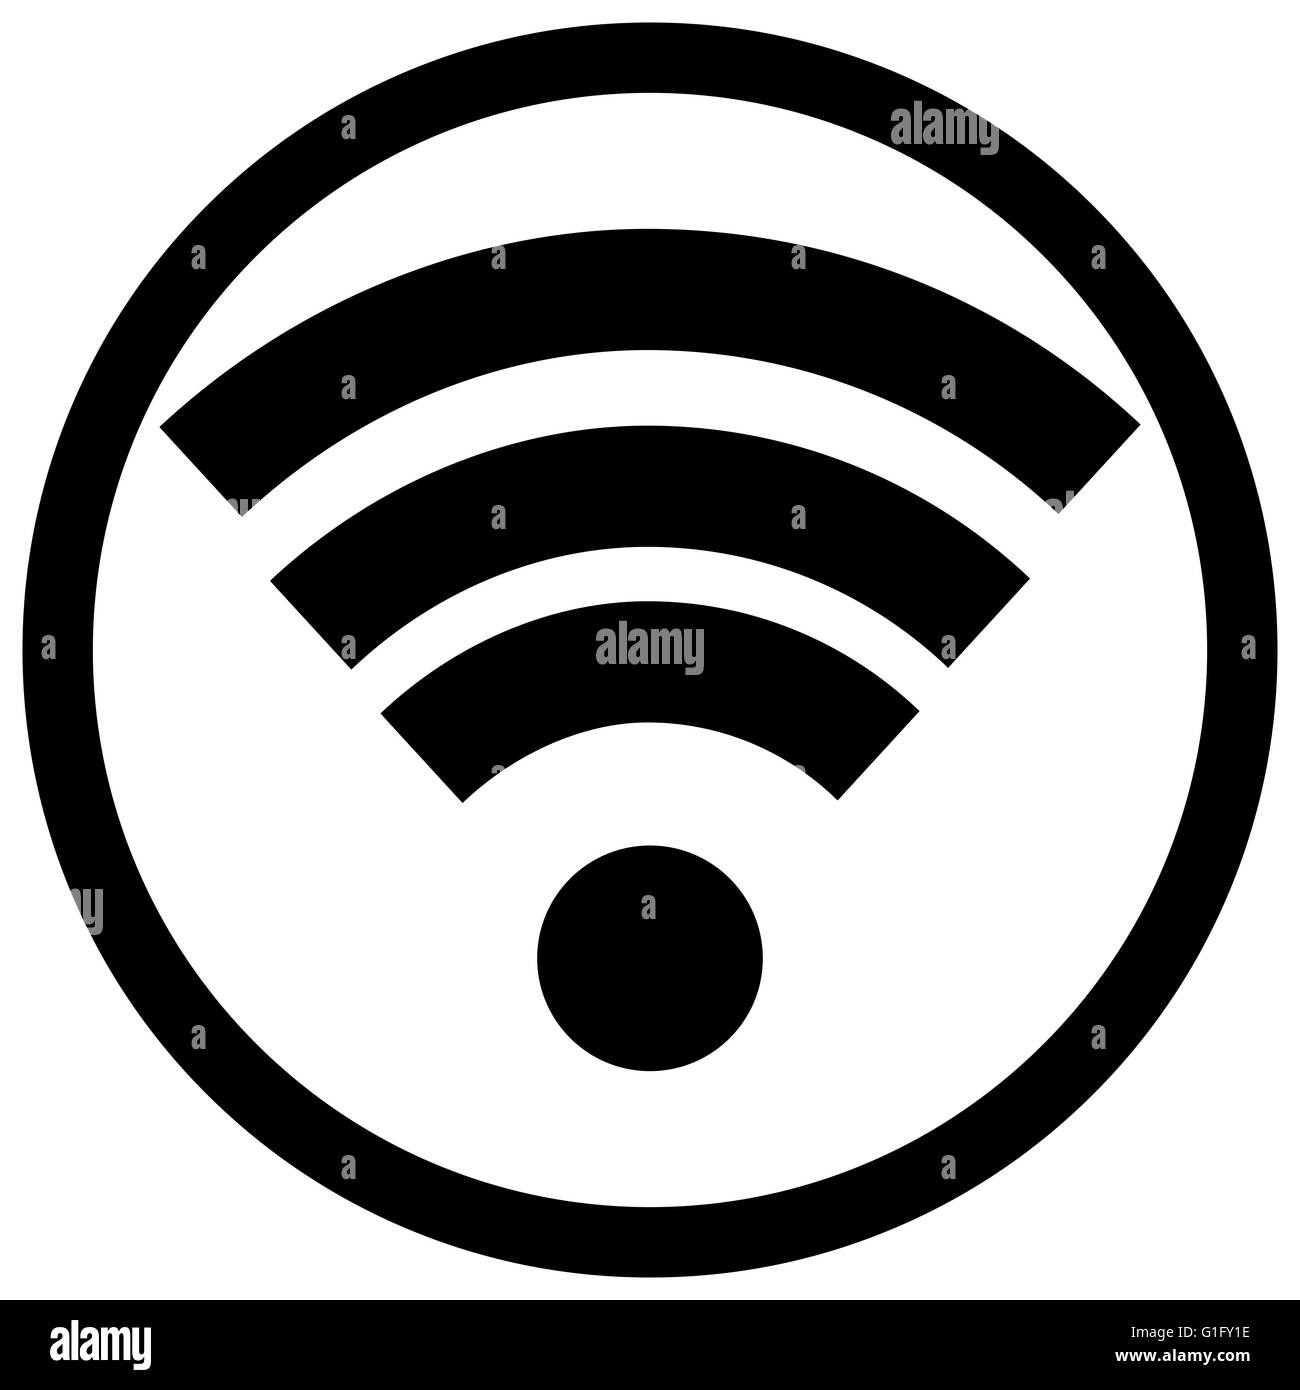 WiFi-Symbol schwarz weiß. WiFi-Symbol und w-LAN, gratis Wifi-Internet und Wifi-Symbol, Wifi-Zone und WiFi-Signal verbinden. Vektor-fla Stockfoto